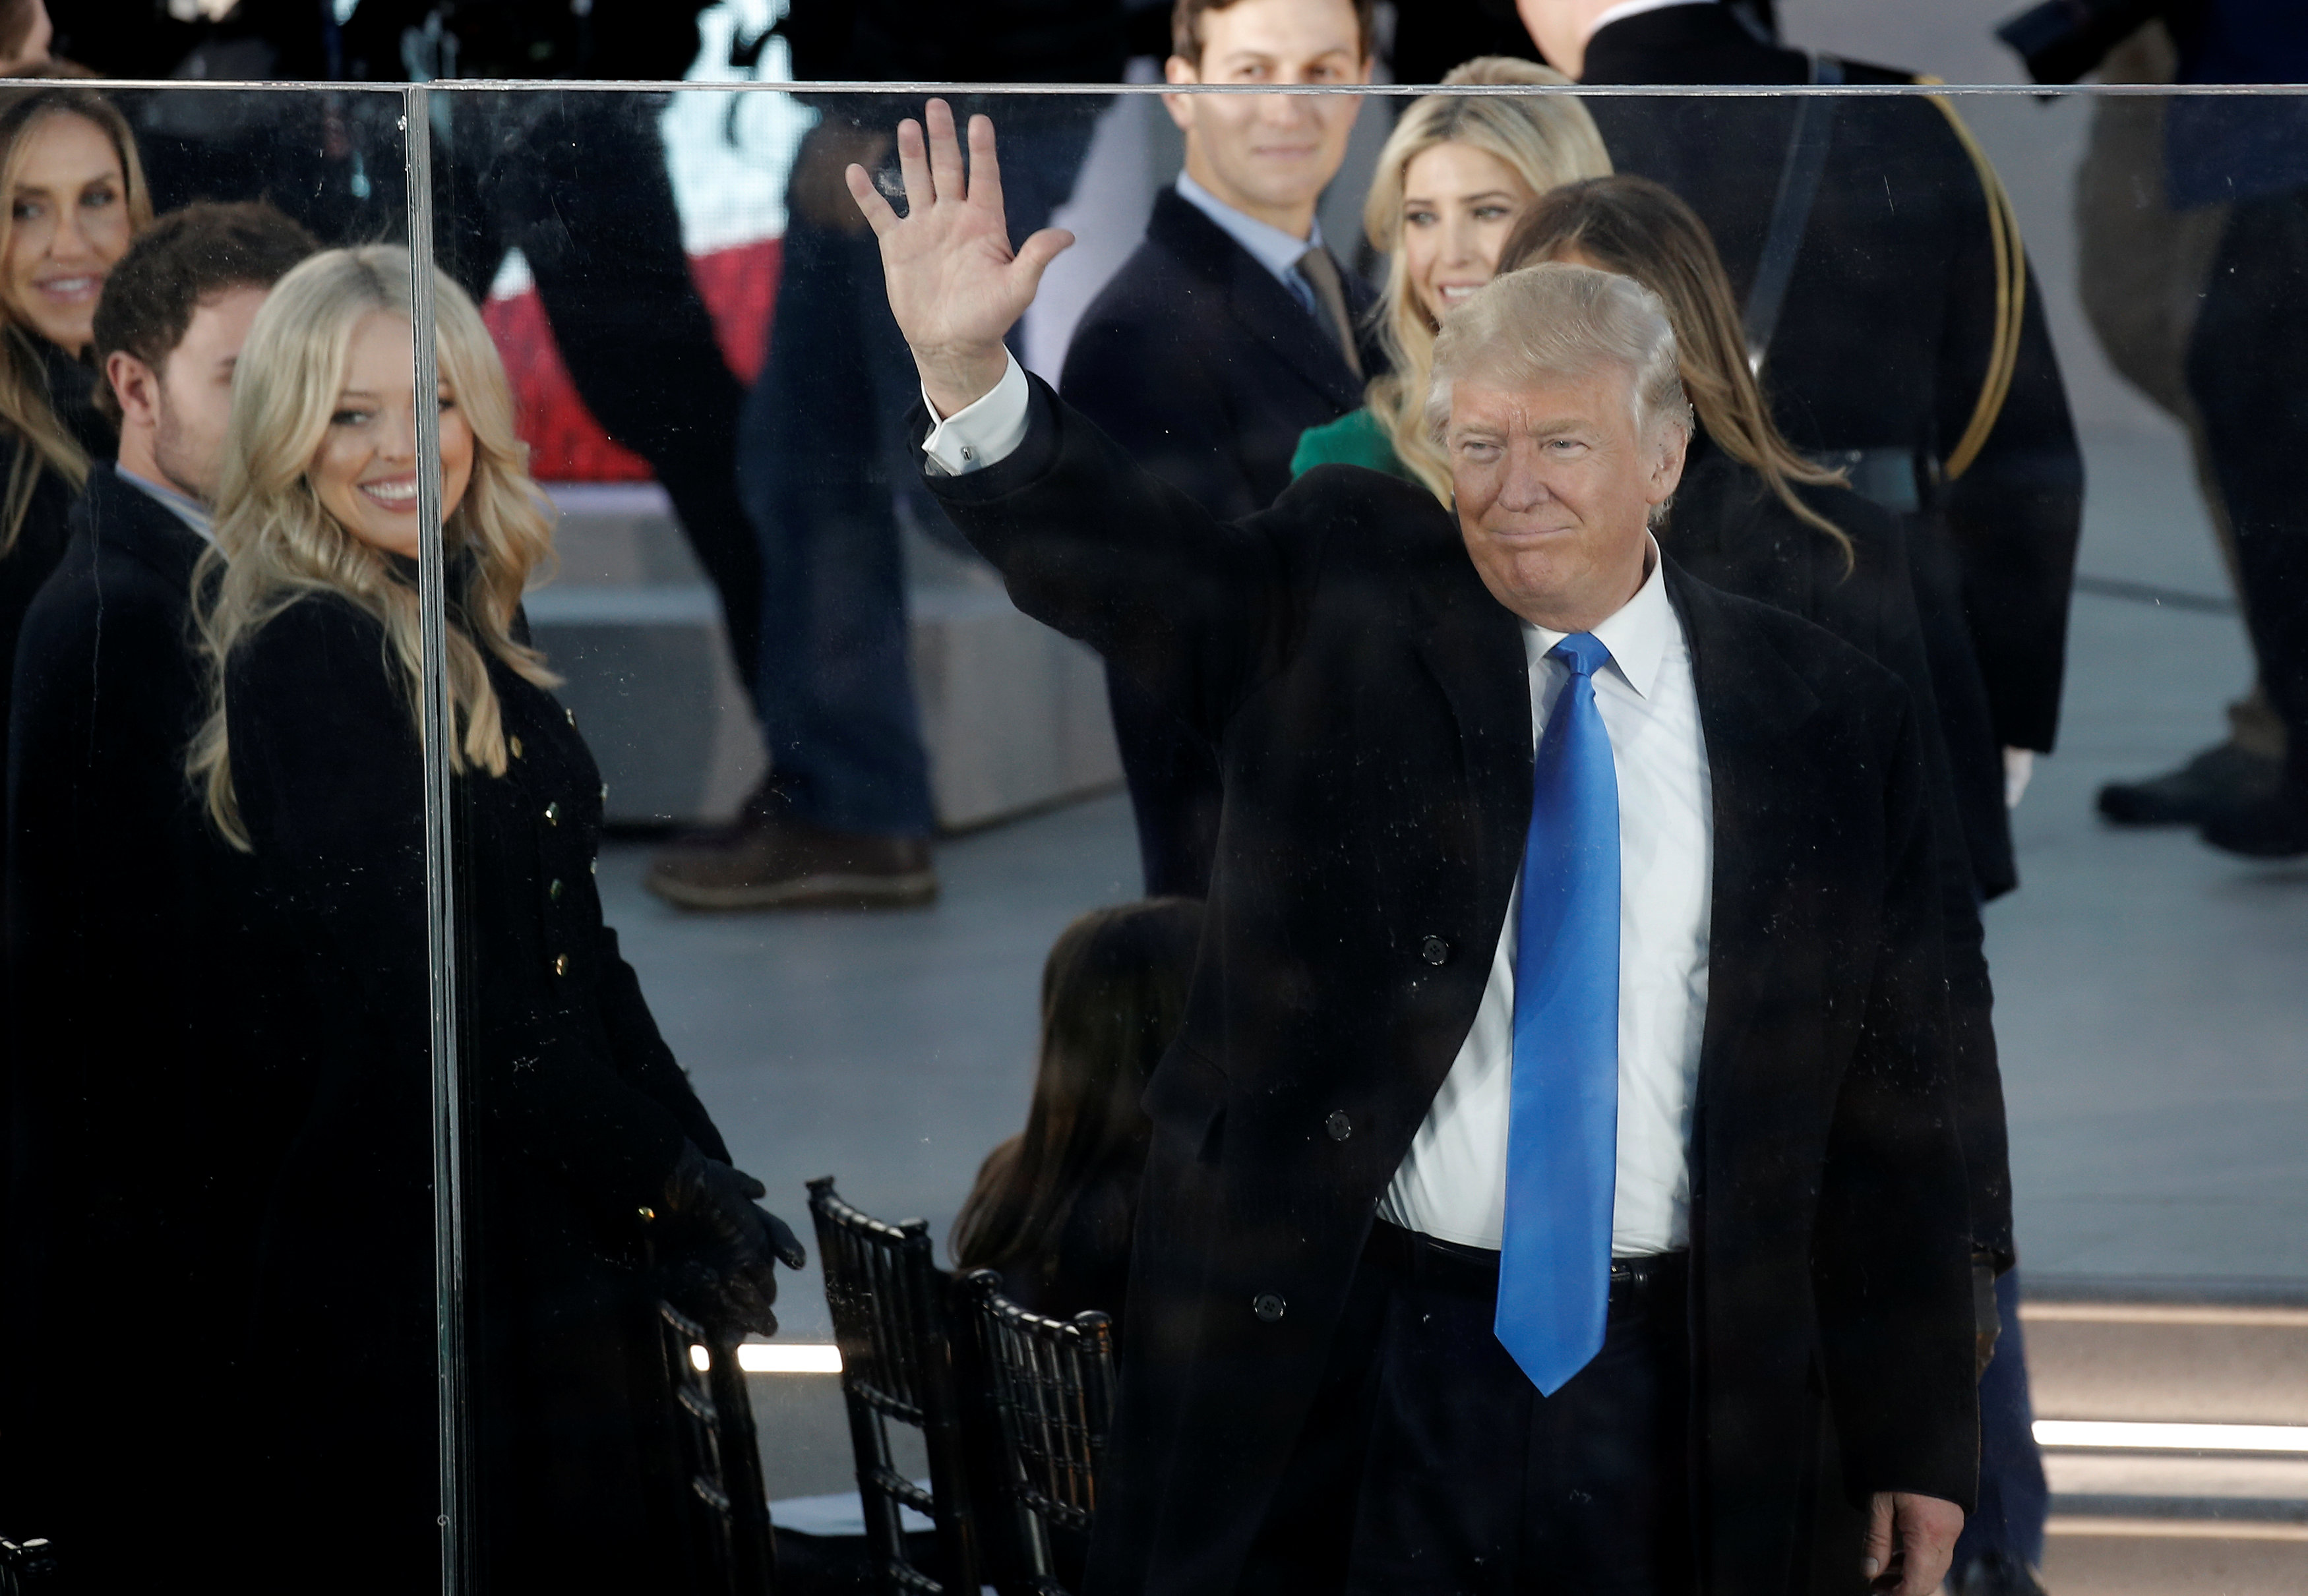 Donald Trump pledges to 'unify' Americans